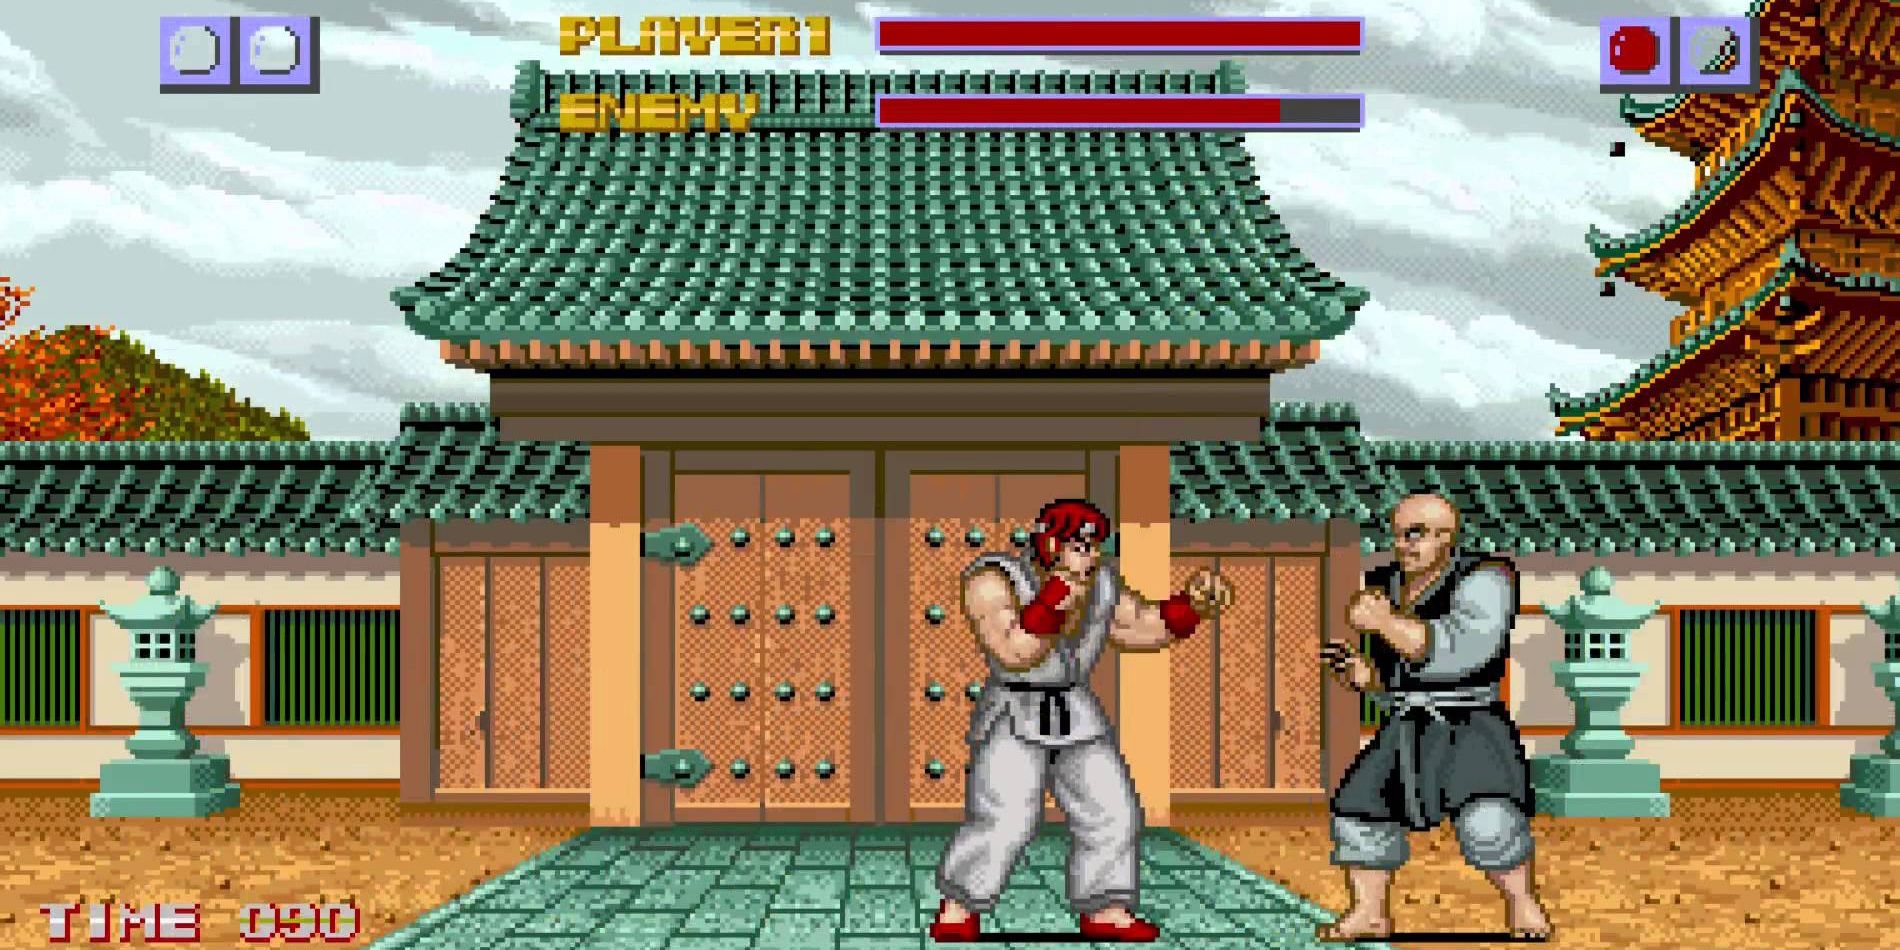 Ryu original street fighter